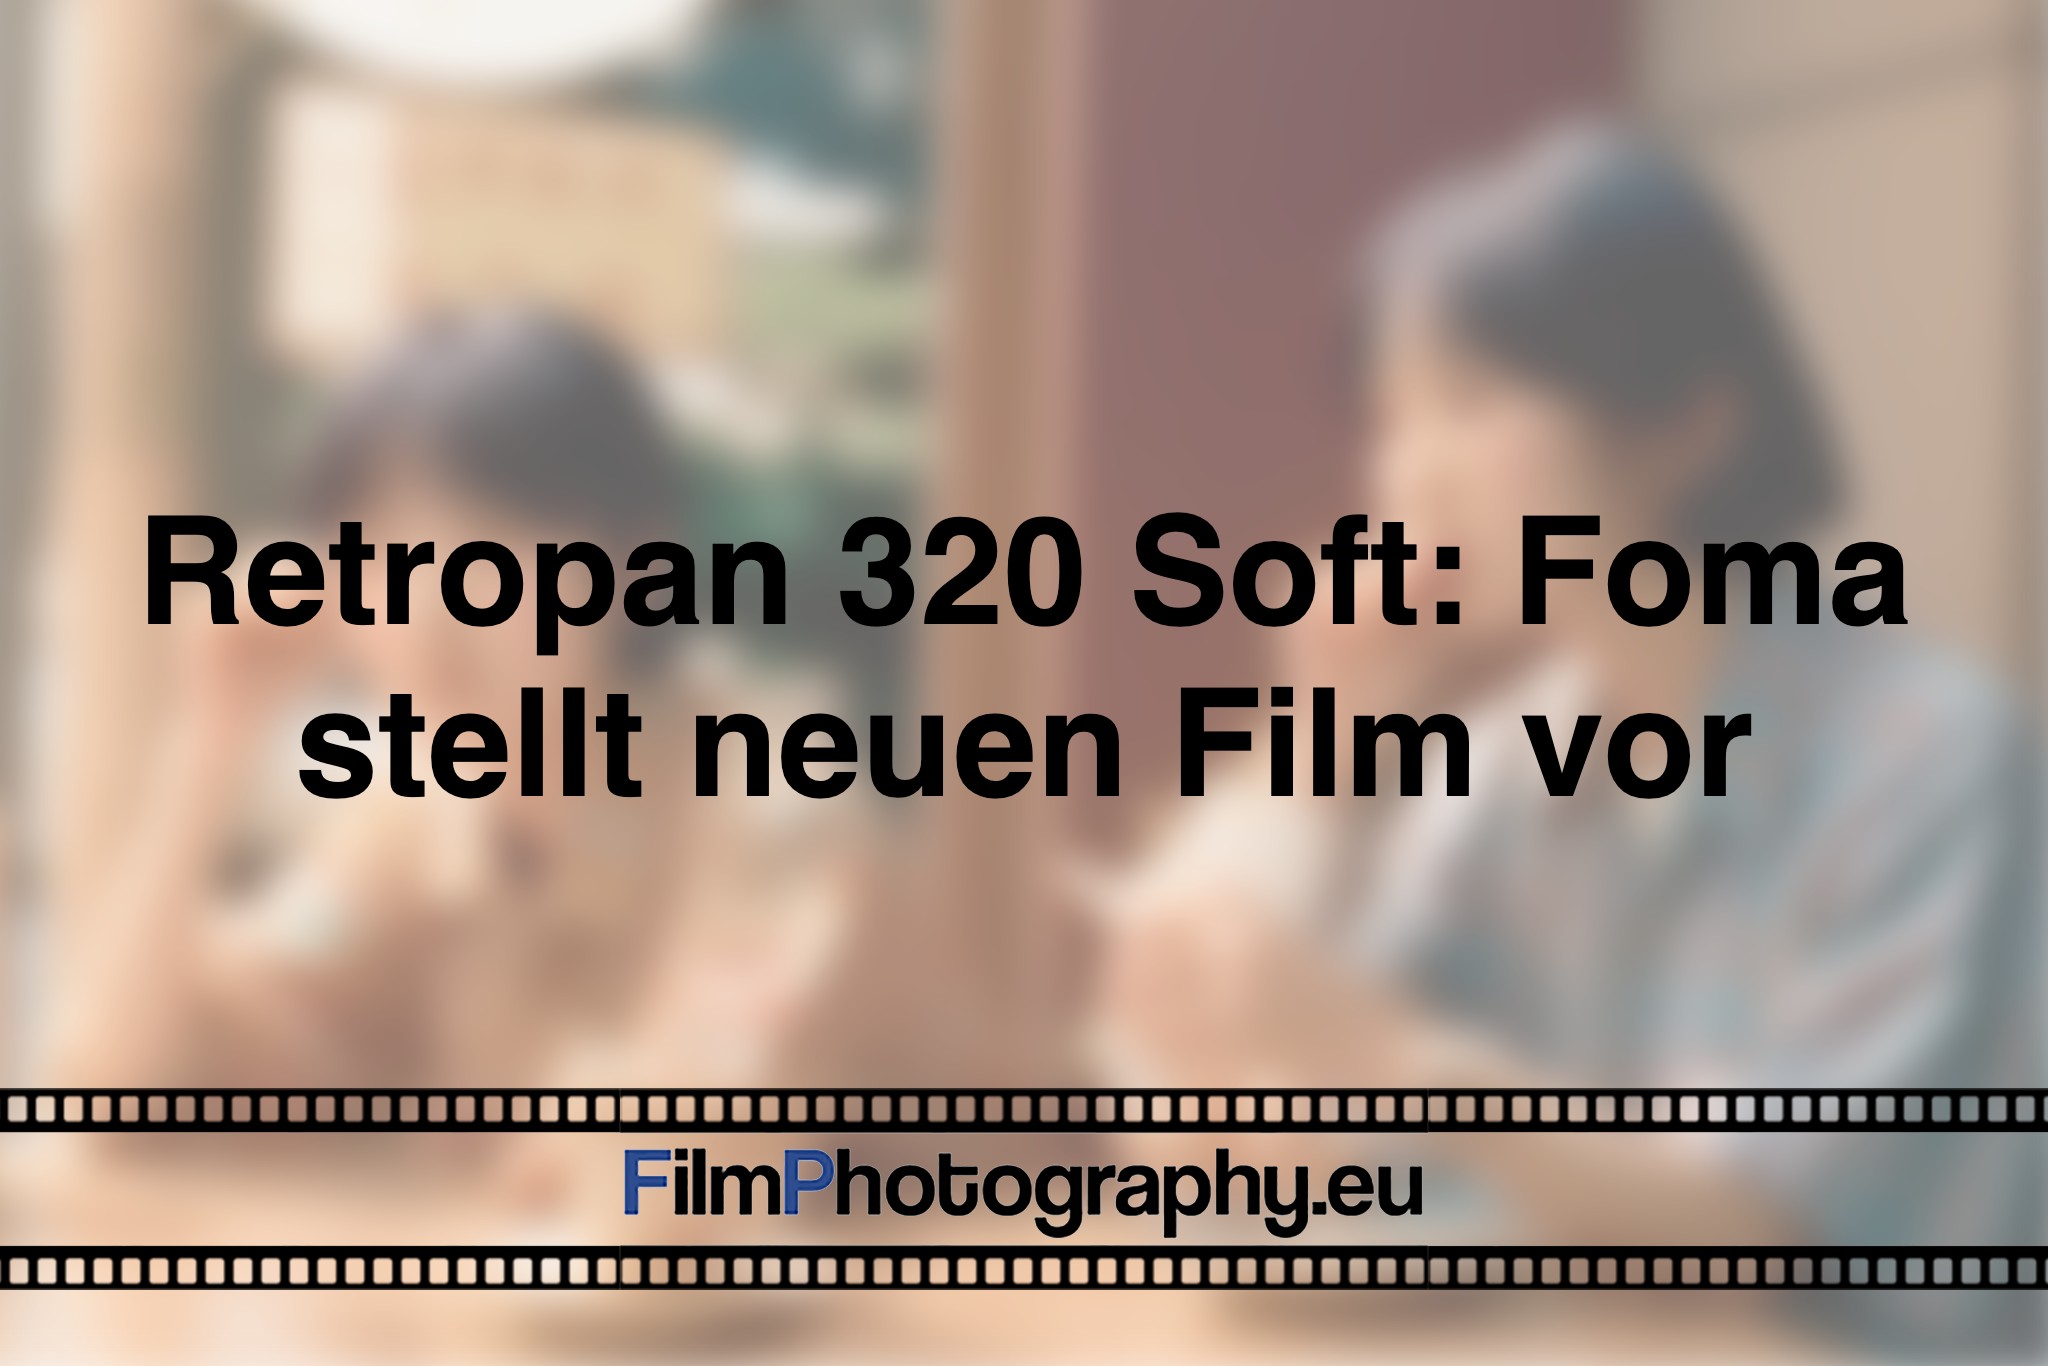 retropan-320-soft-foma-stellt-neuen-film-vor-foto-bnv